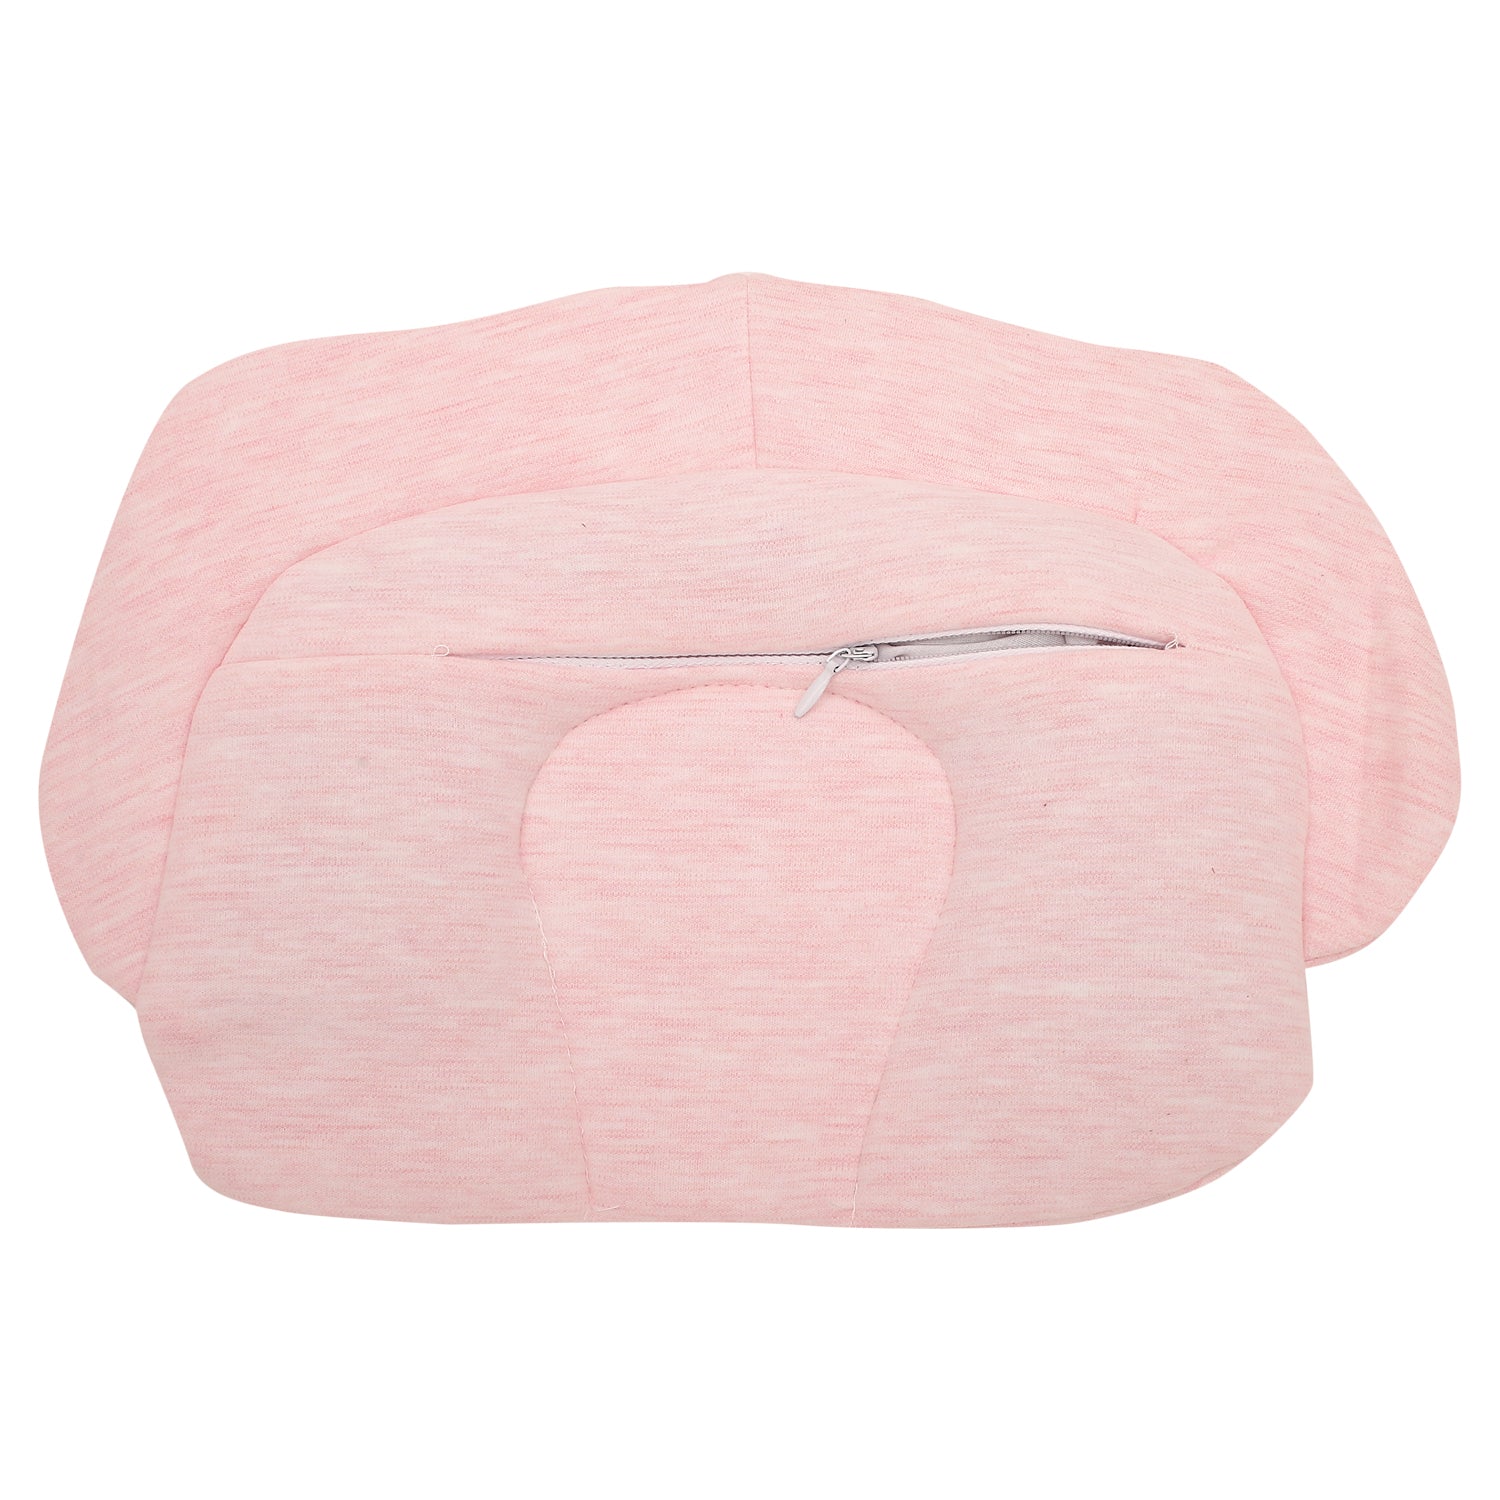 Sleepy Bear Pink Pillow - Baby Moo